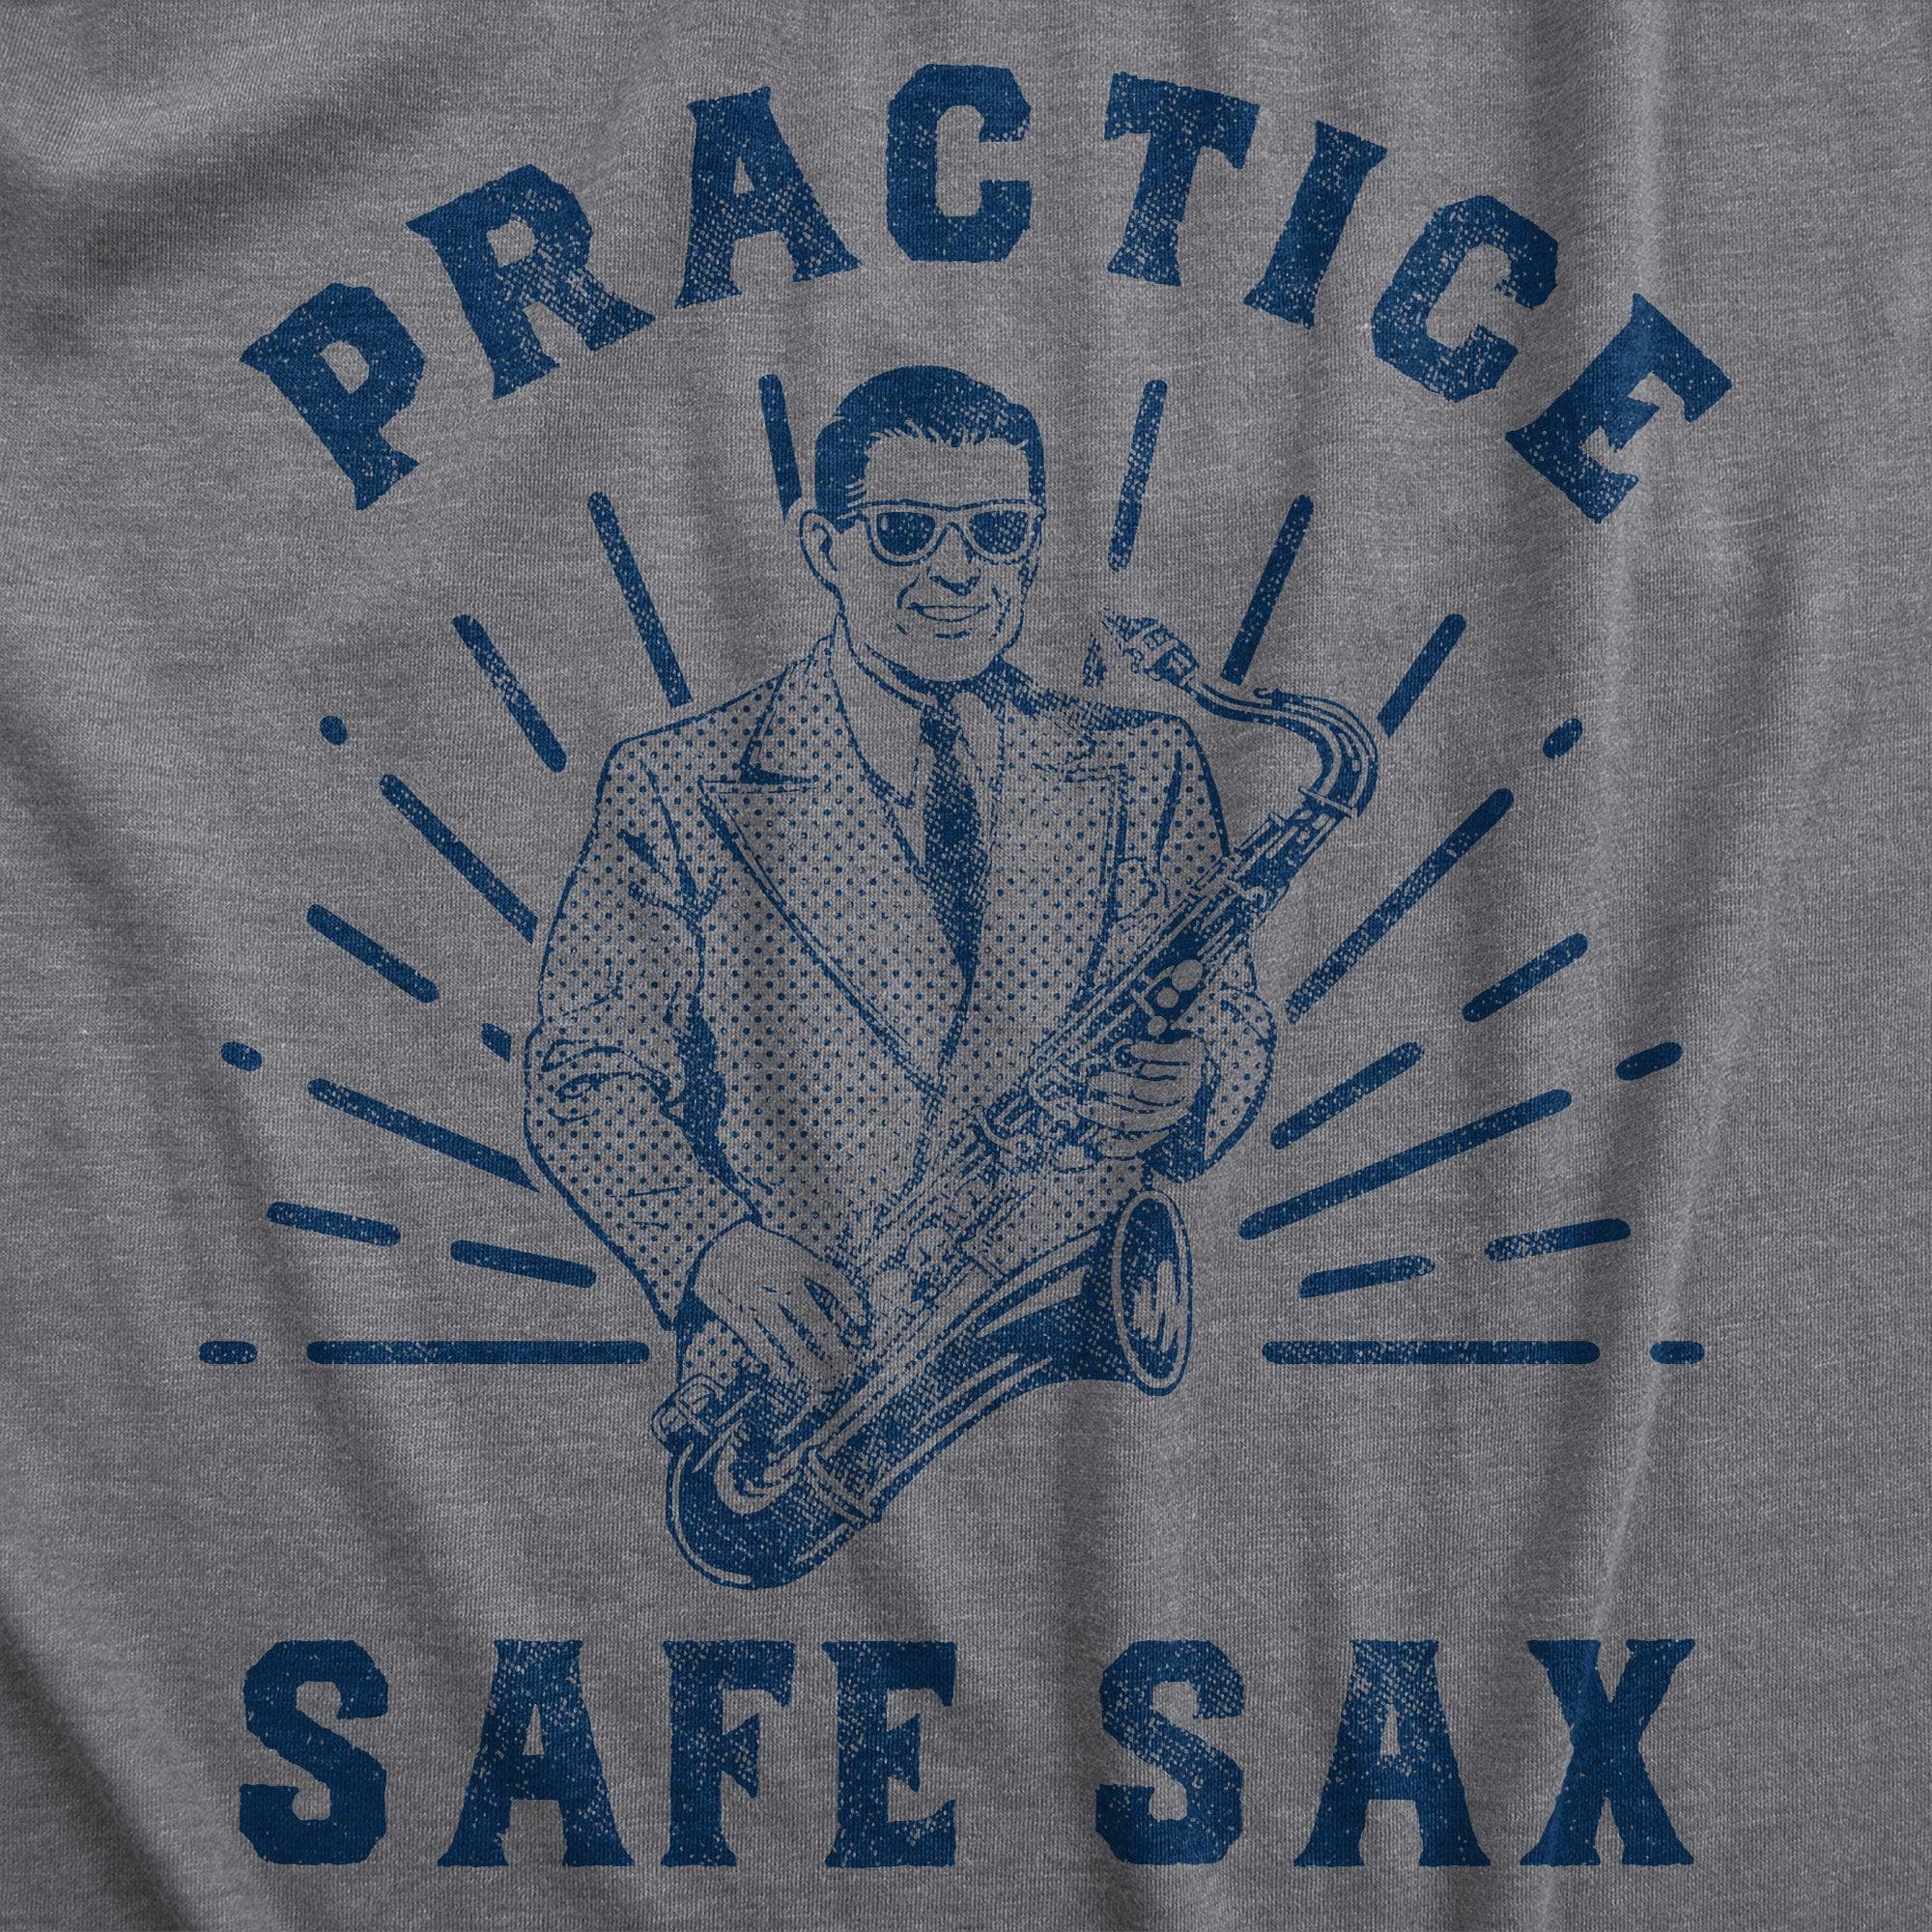 Practice Safe Sax Men's Tshirt  -  Crazy Dog T-Shirts